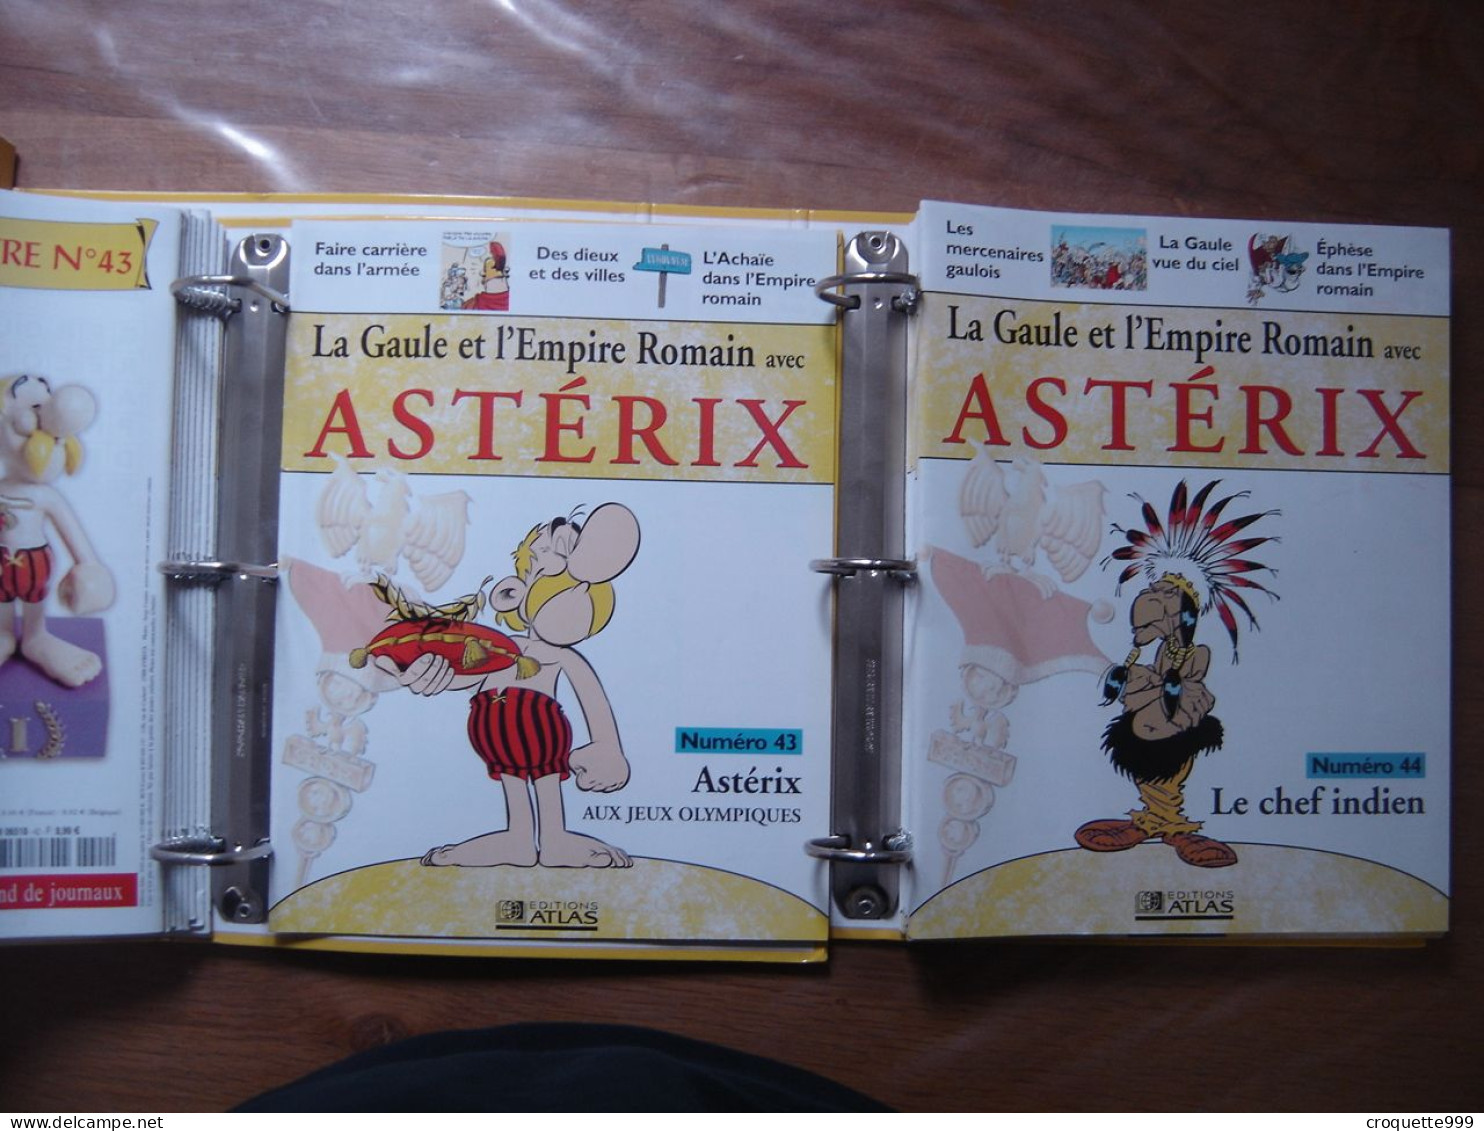 La Gaule et l'empire romain avec ASTERIX Editions Atlas 56 numeros manque 14 numeros